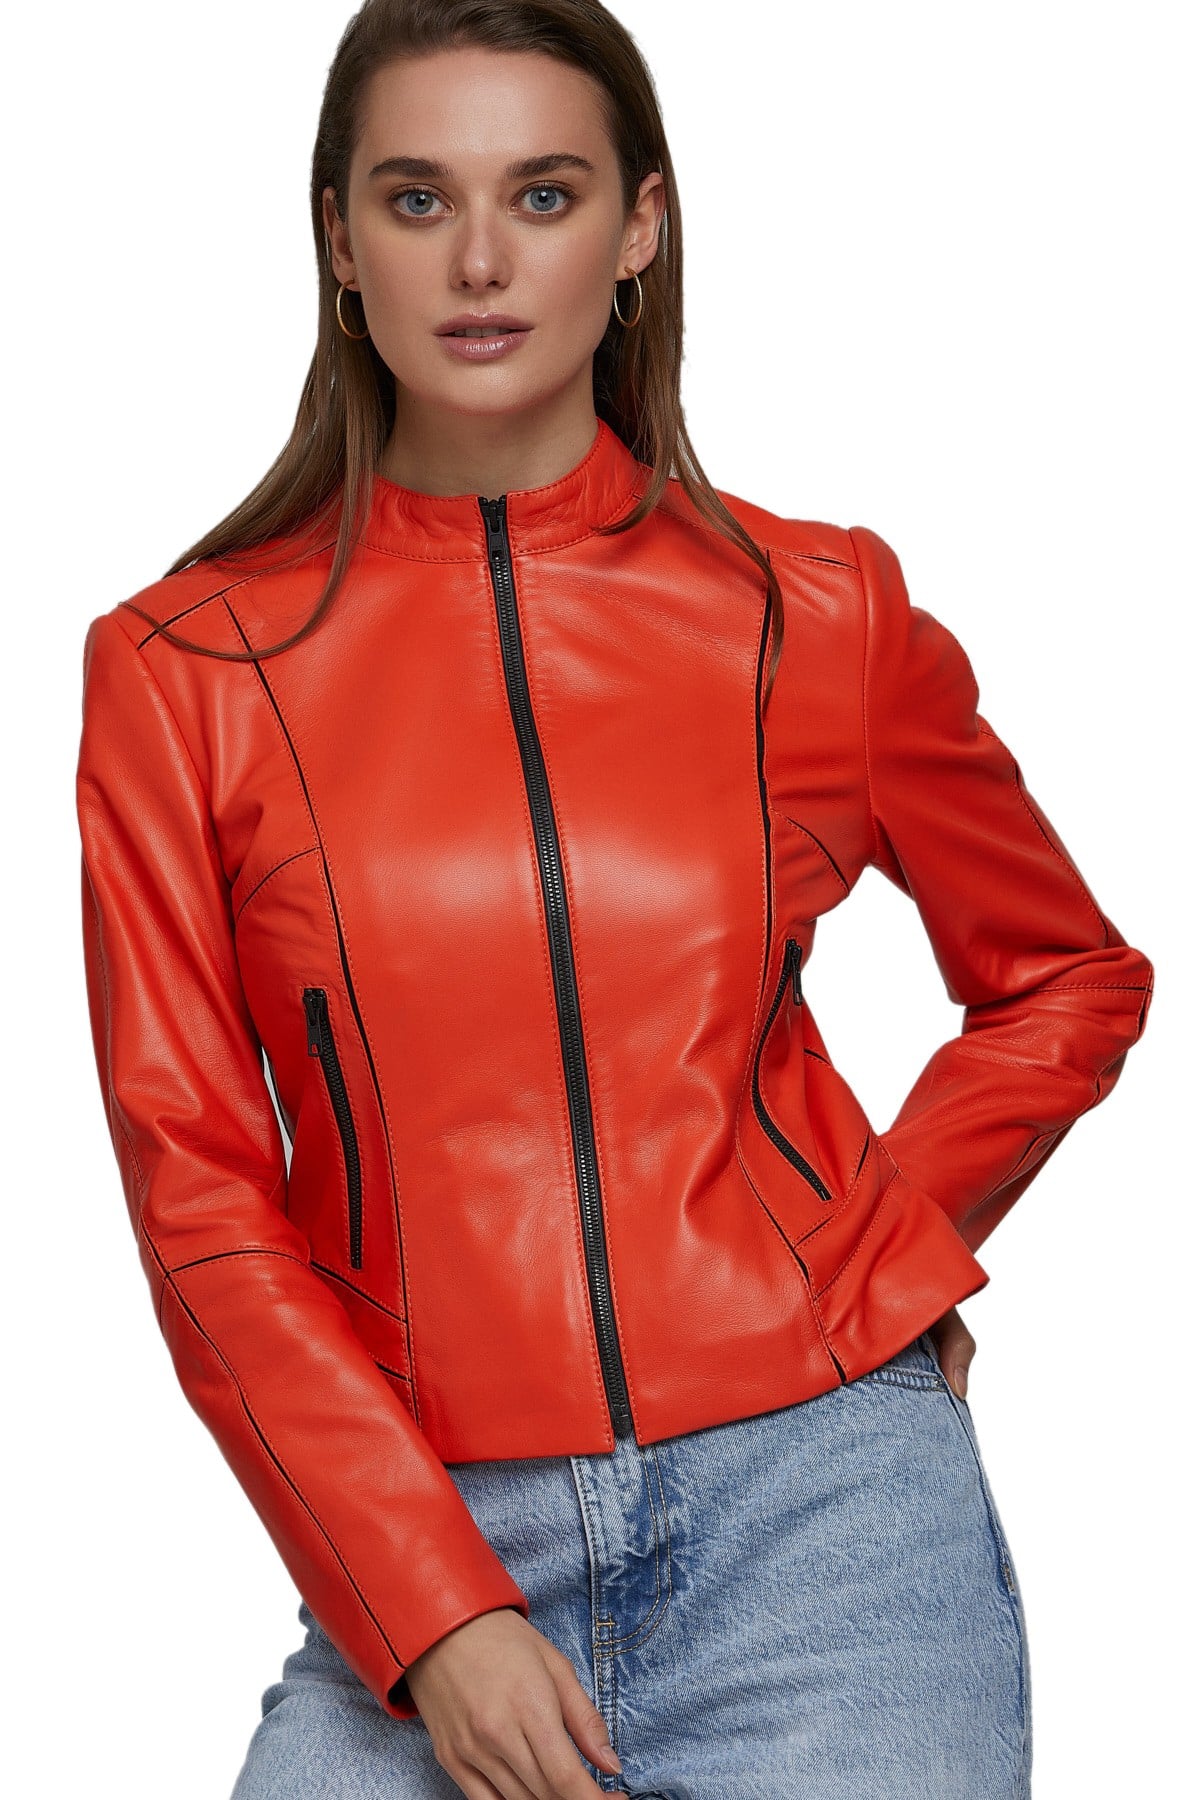 Jessica Stein Women's 100 % Real Orange Leather Stylish Jacket